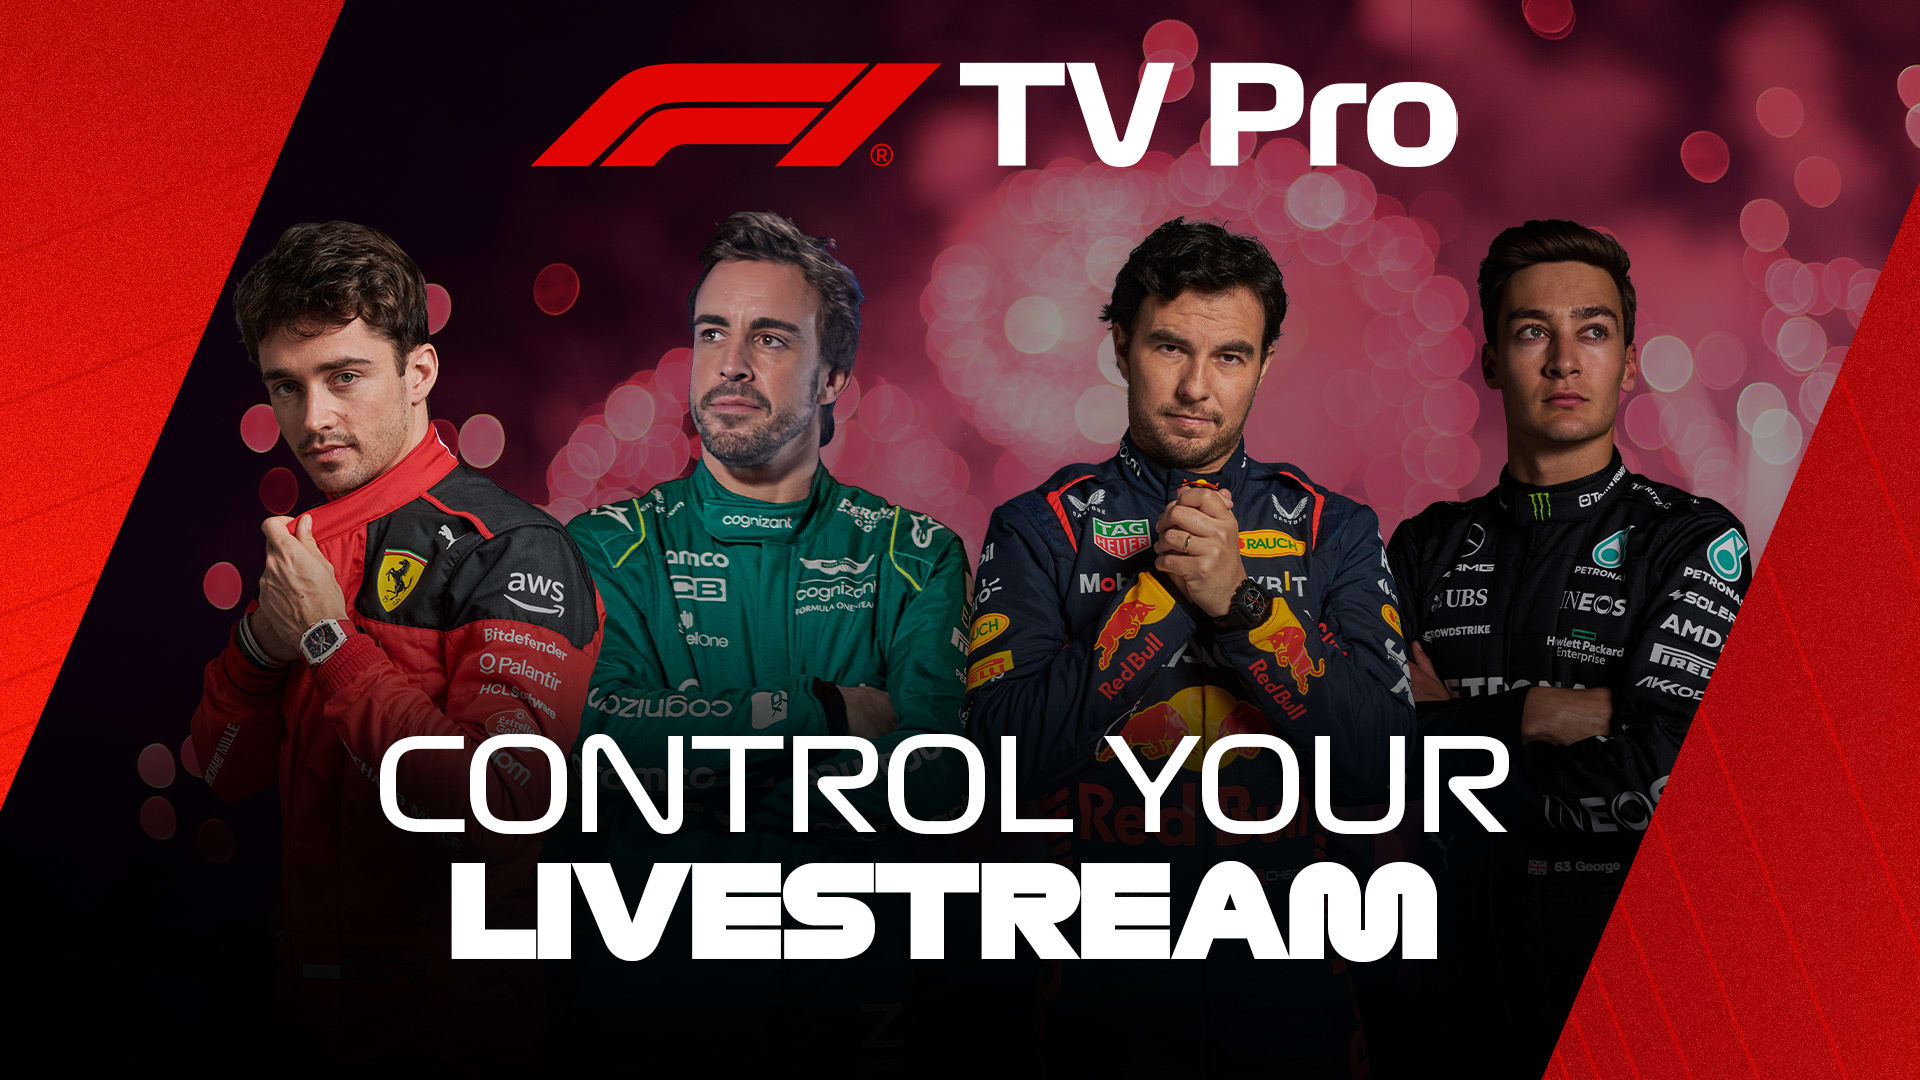 How to stream the Formula 1 2023 Abu Dhabi Grand Prix on F1 TV Pro Formula 1®